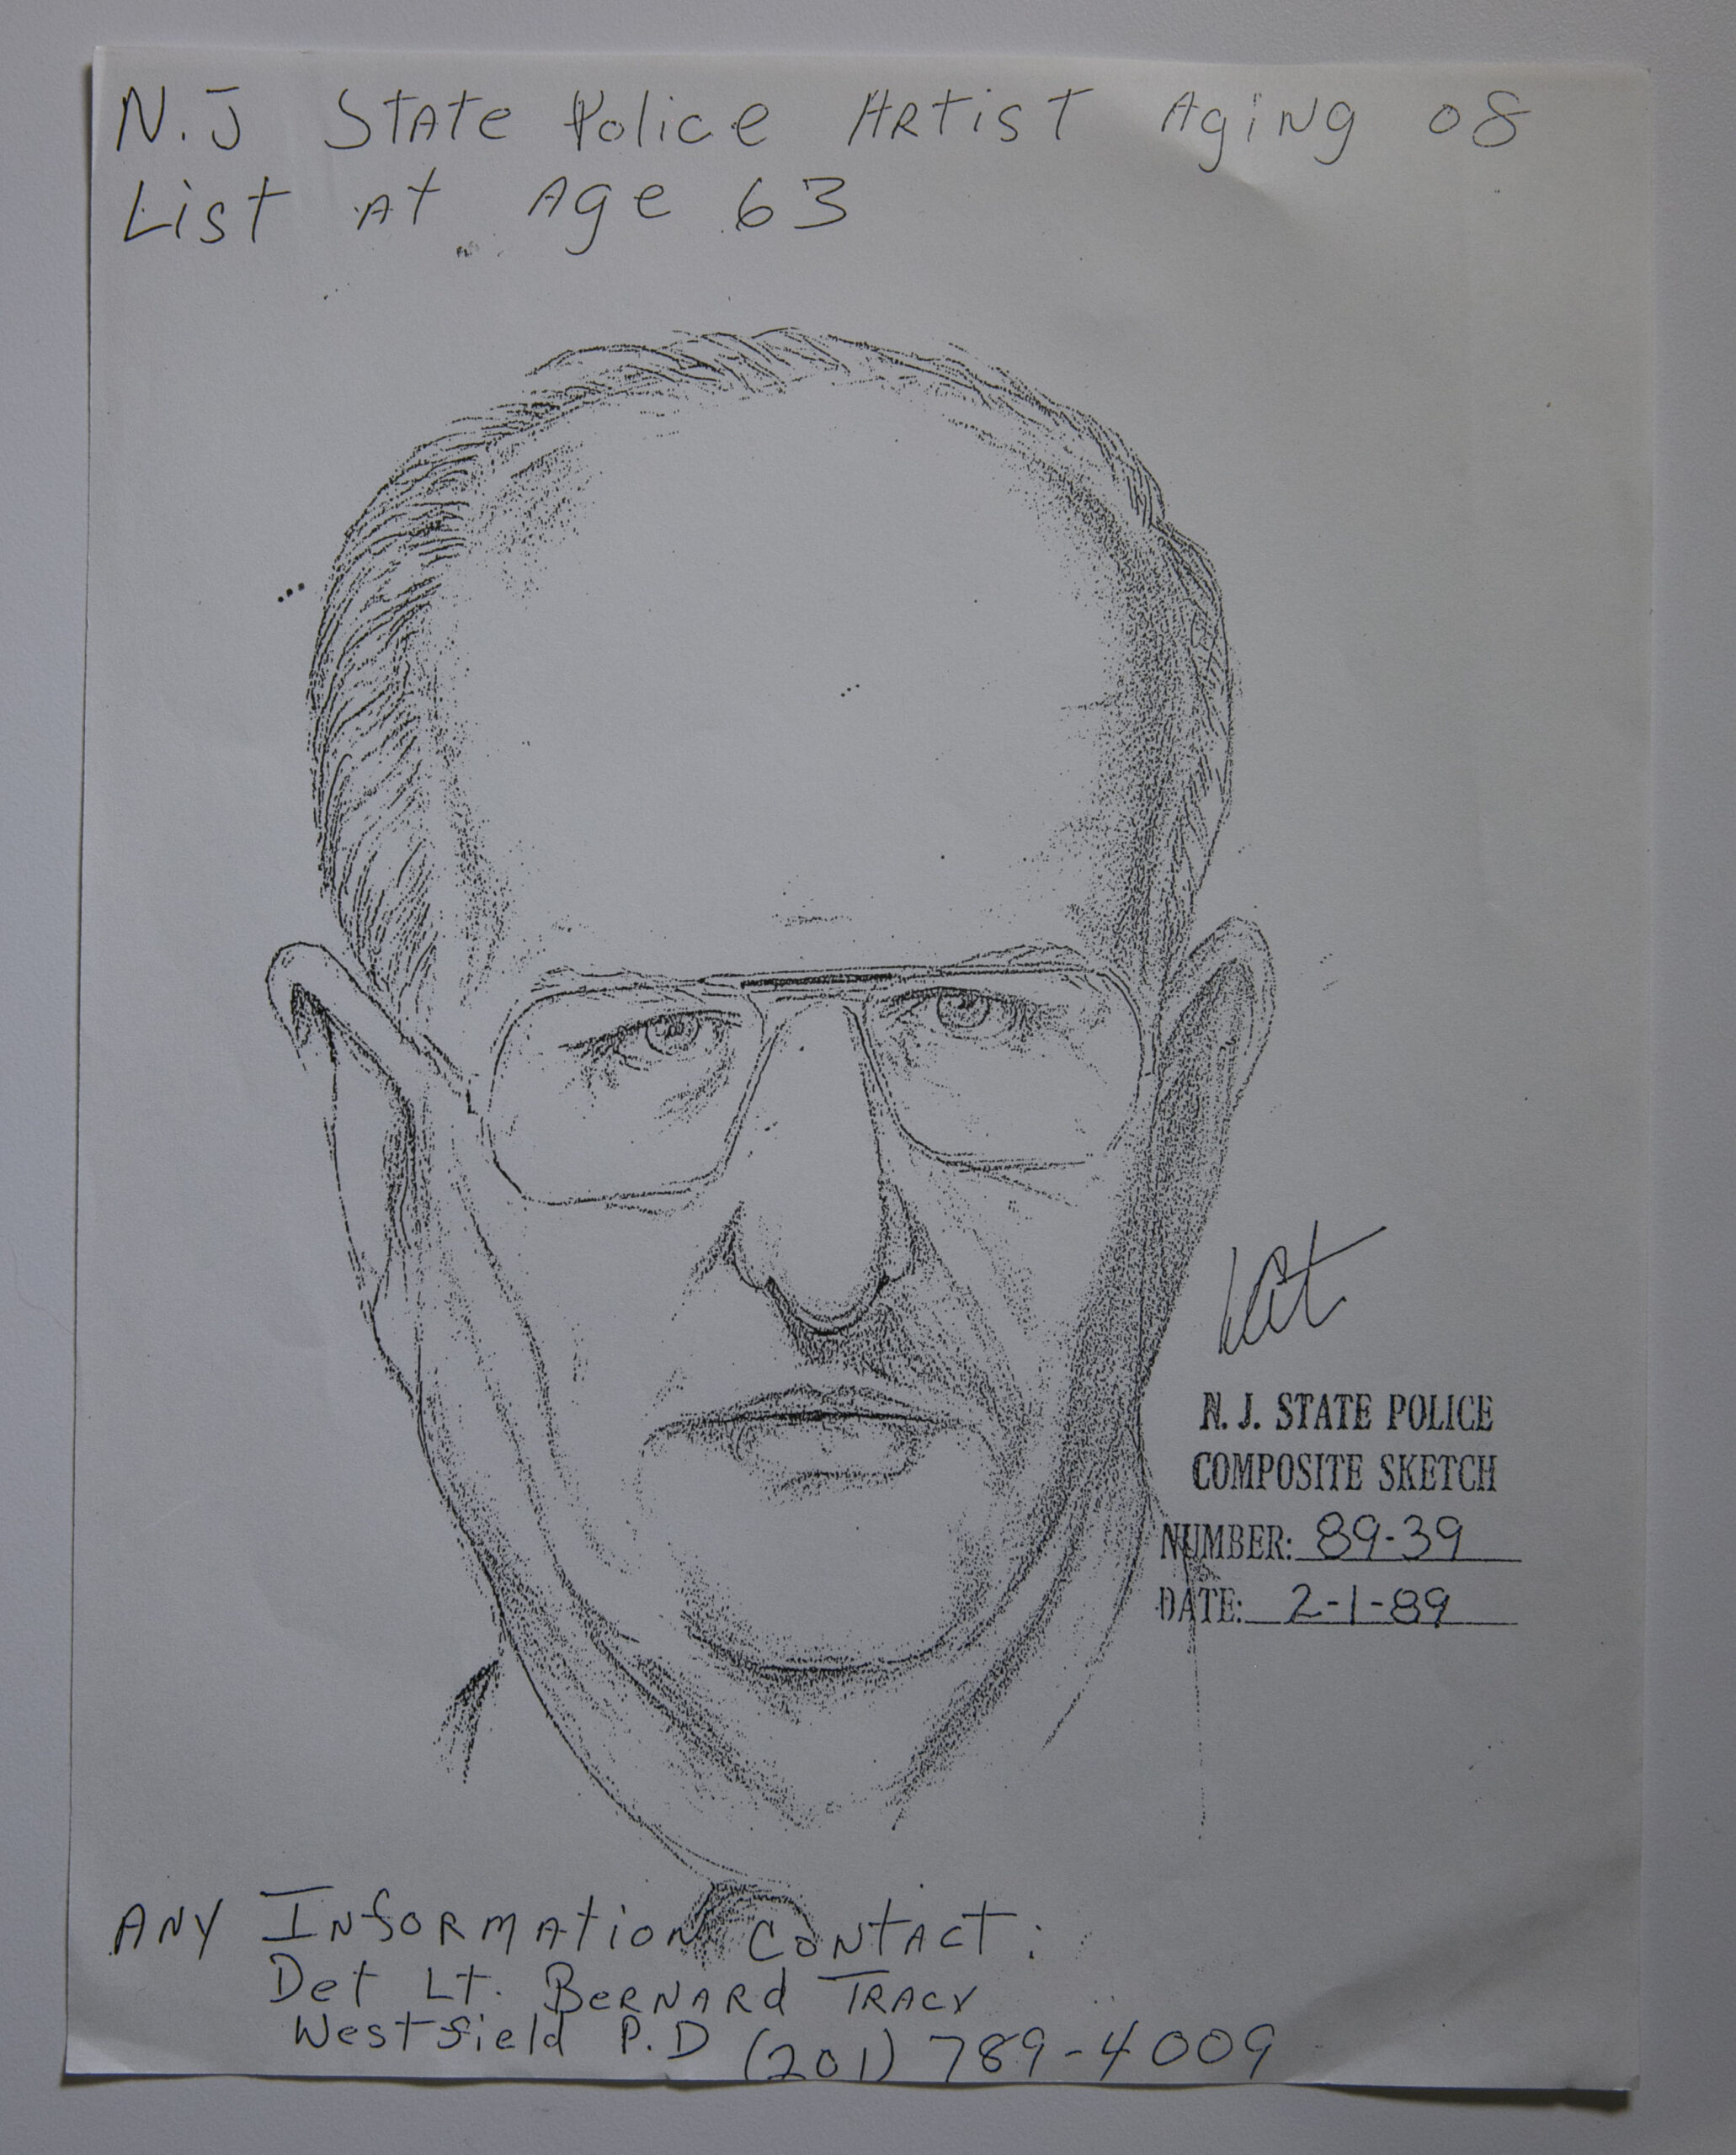 Police composite sketch of John List